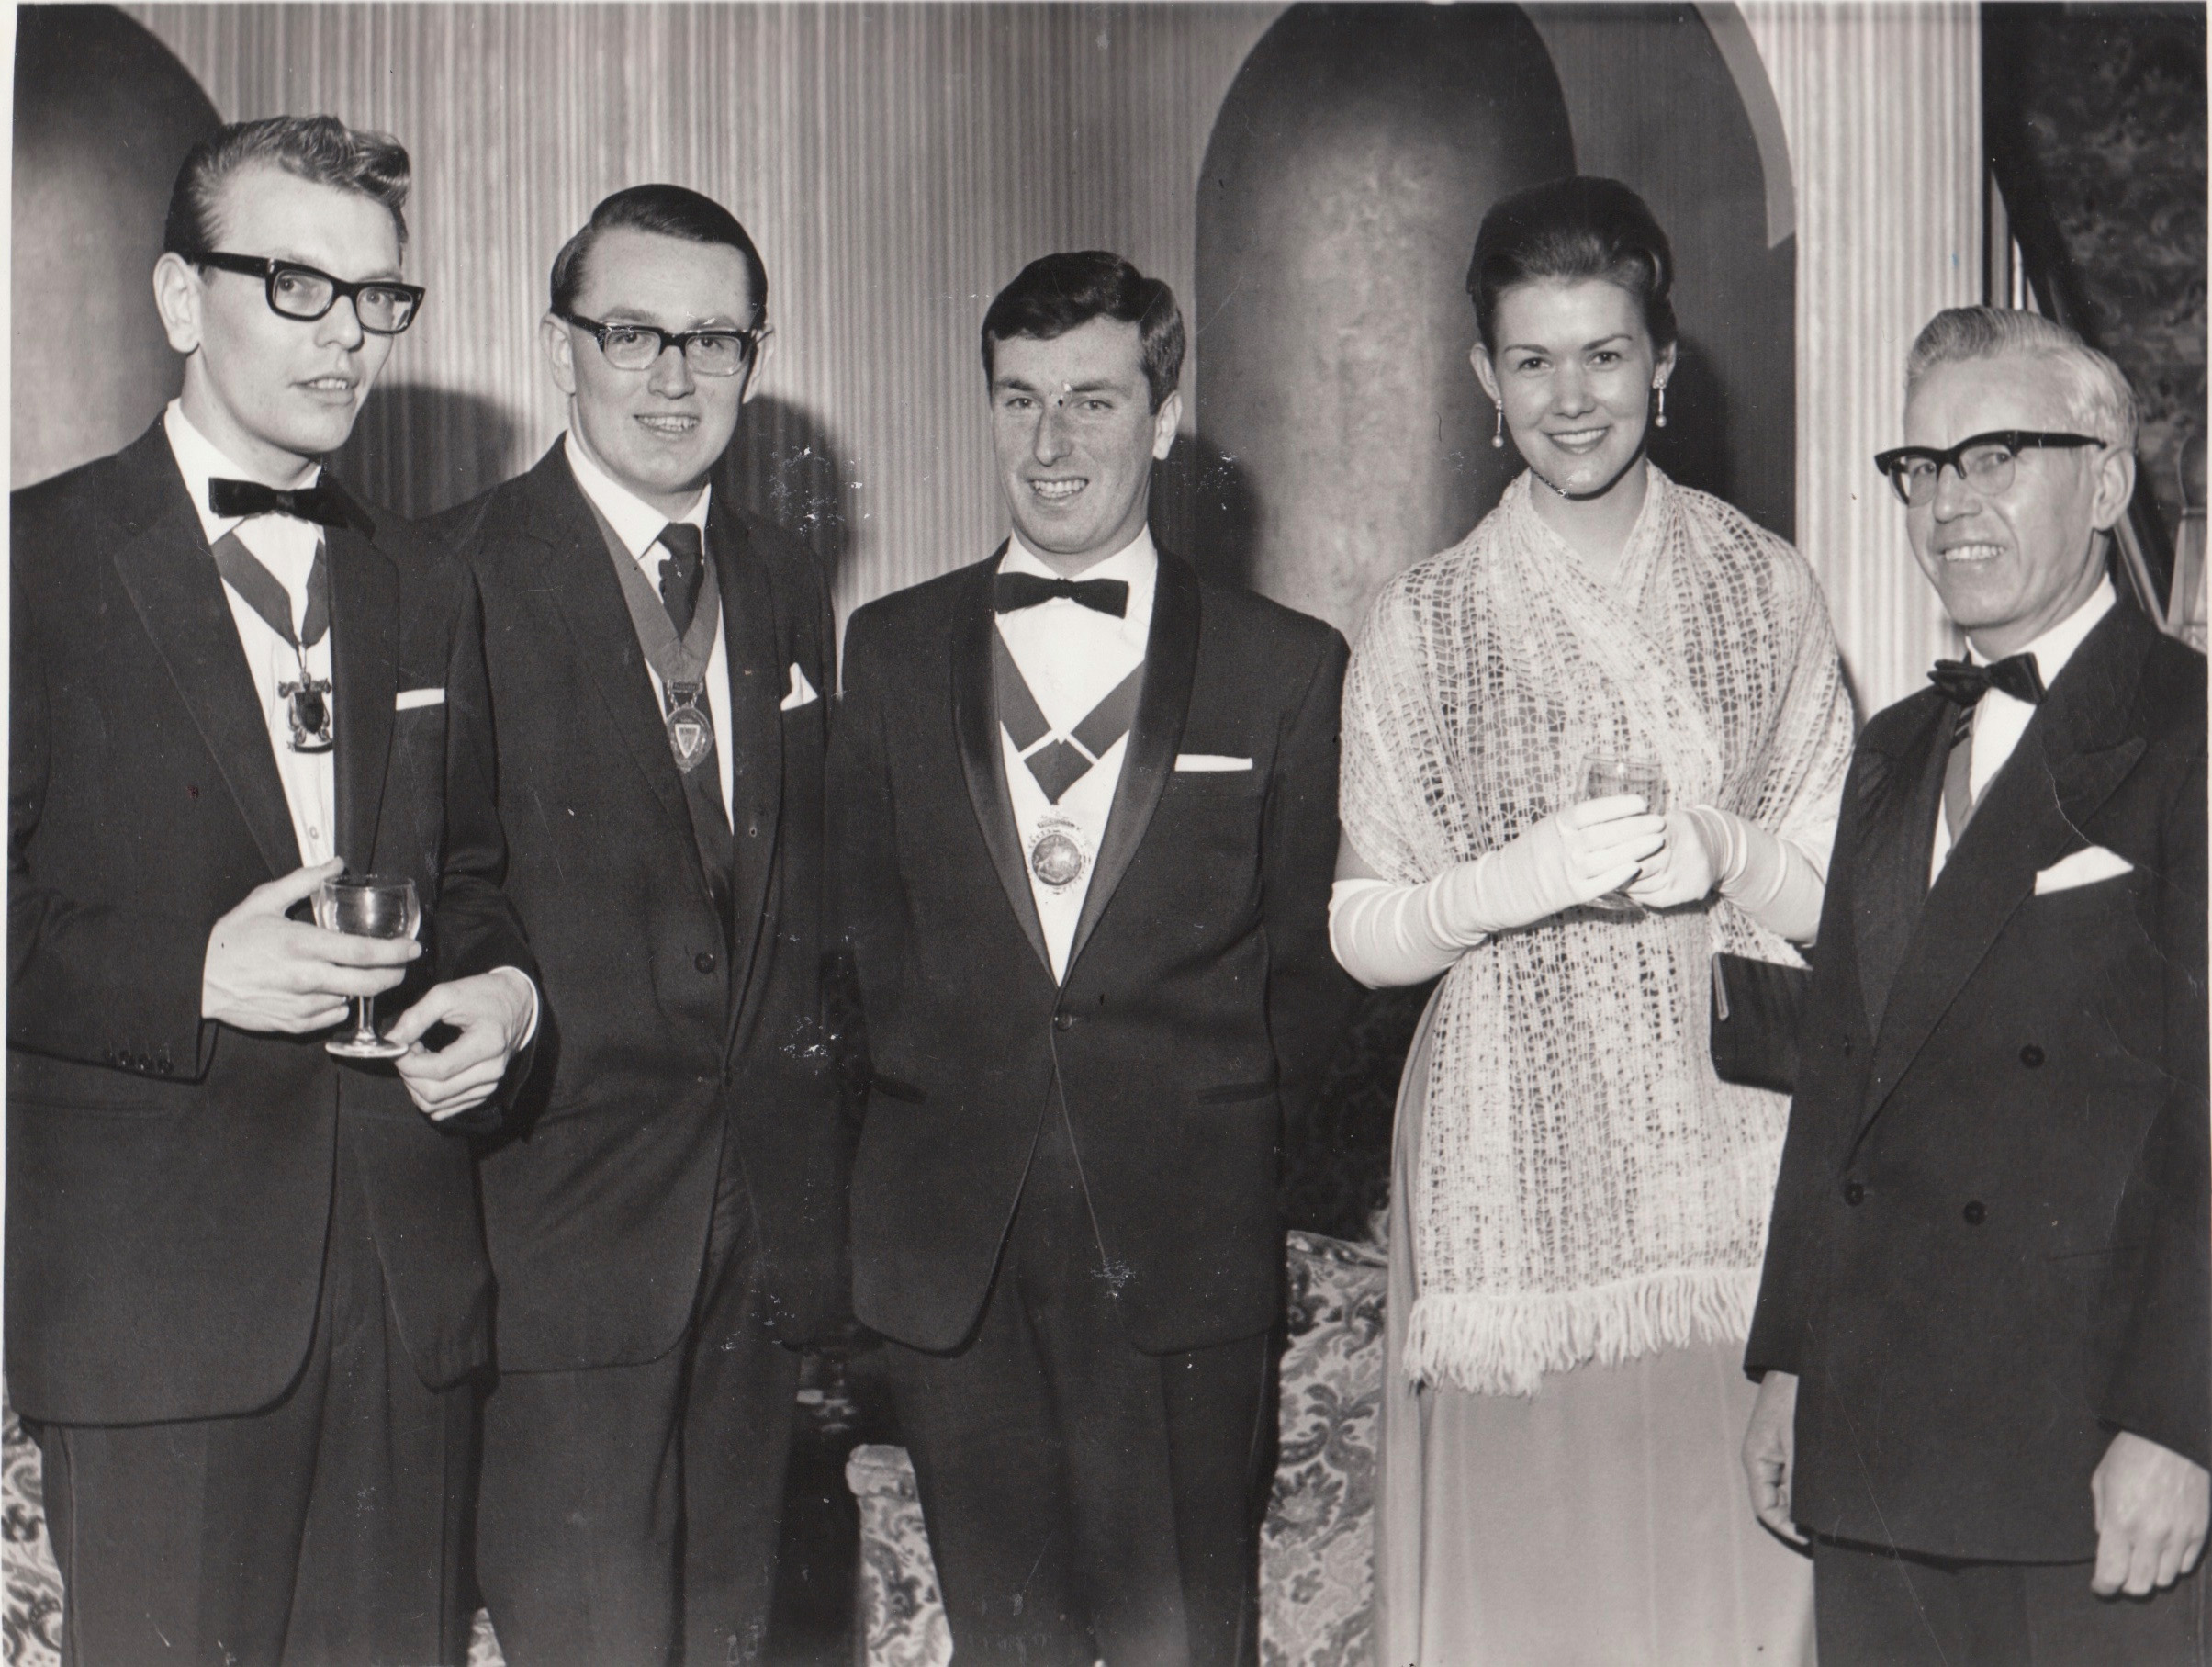 SPSA Annual Dinner 1965. David Begg in the middle